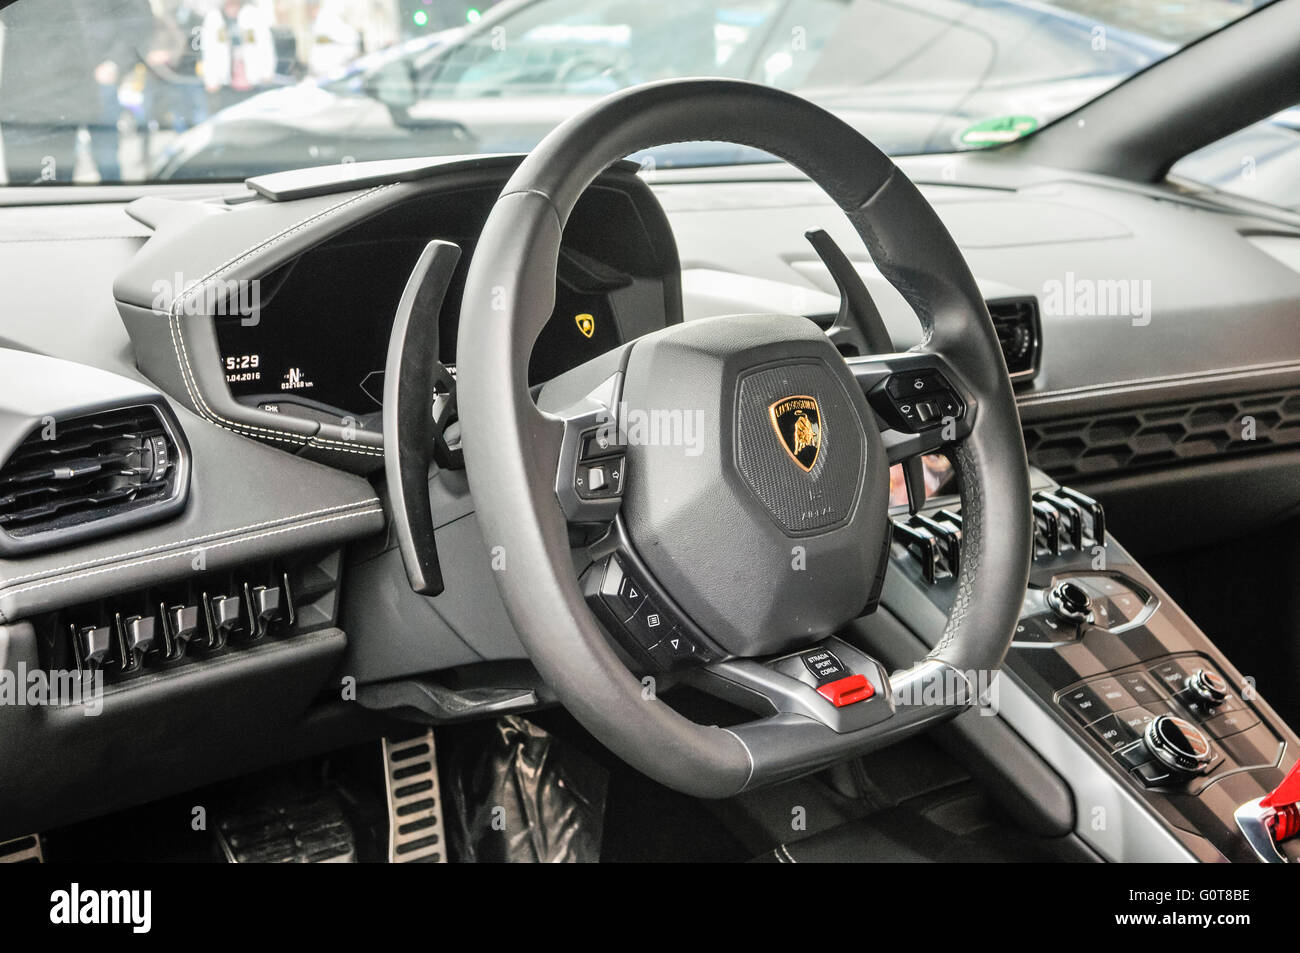 Lamborghini interior hi-res stock photography and images - Alamy